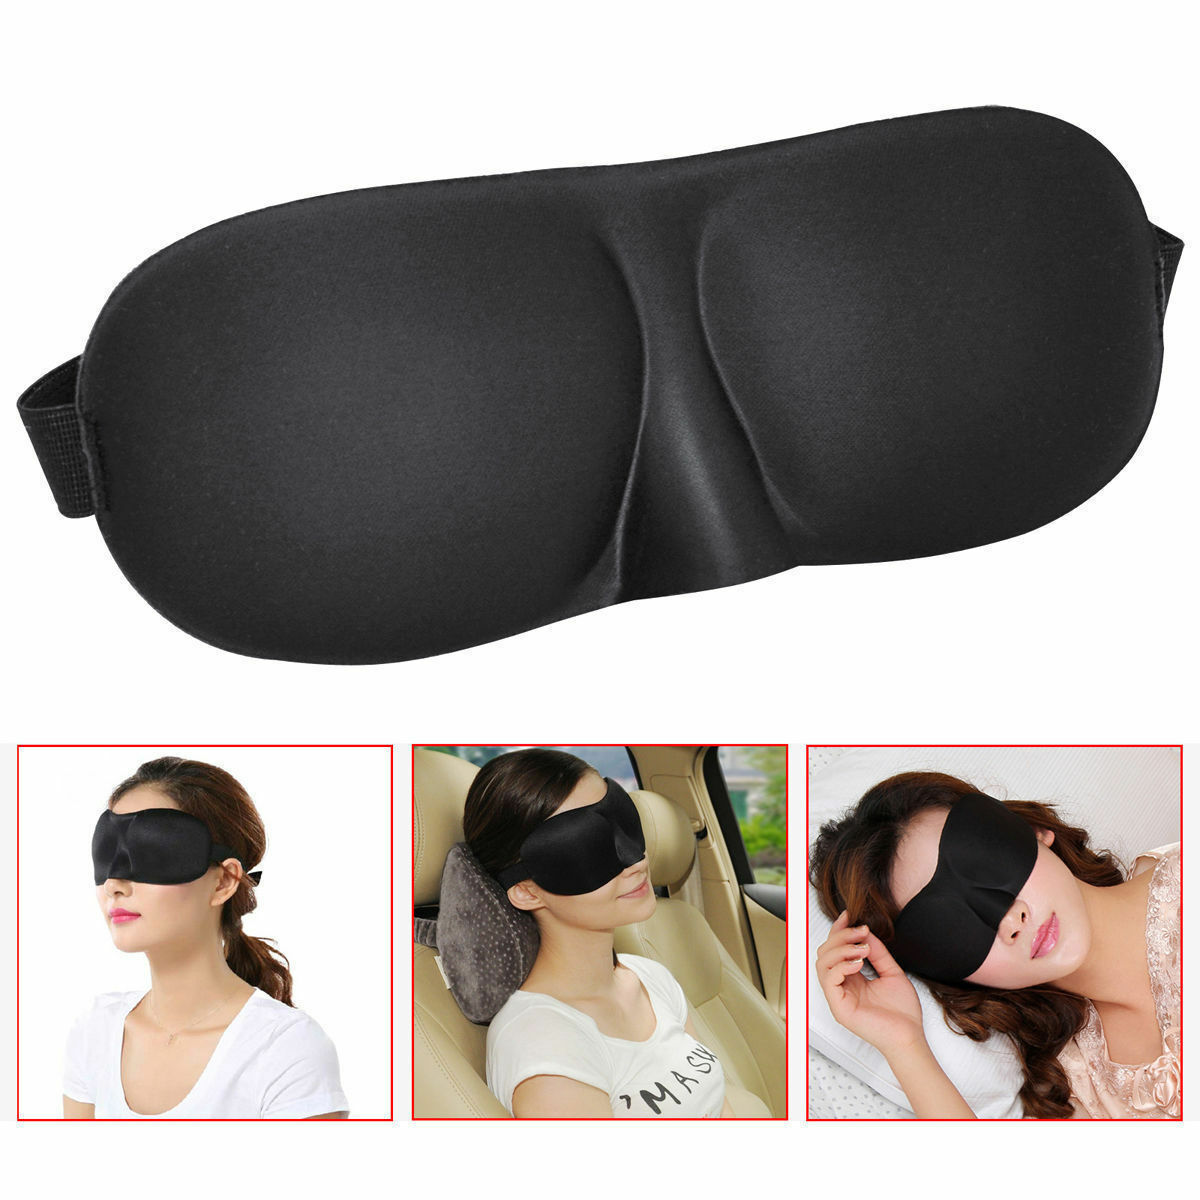 Hot 3d Goggles Sleep Masks Eye Cover Night Soft Sleeping Travel Blindfold